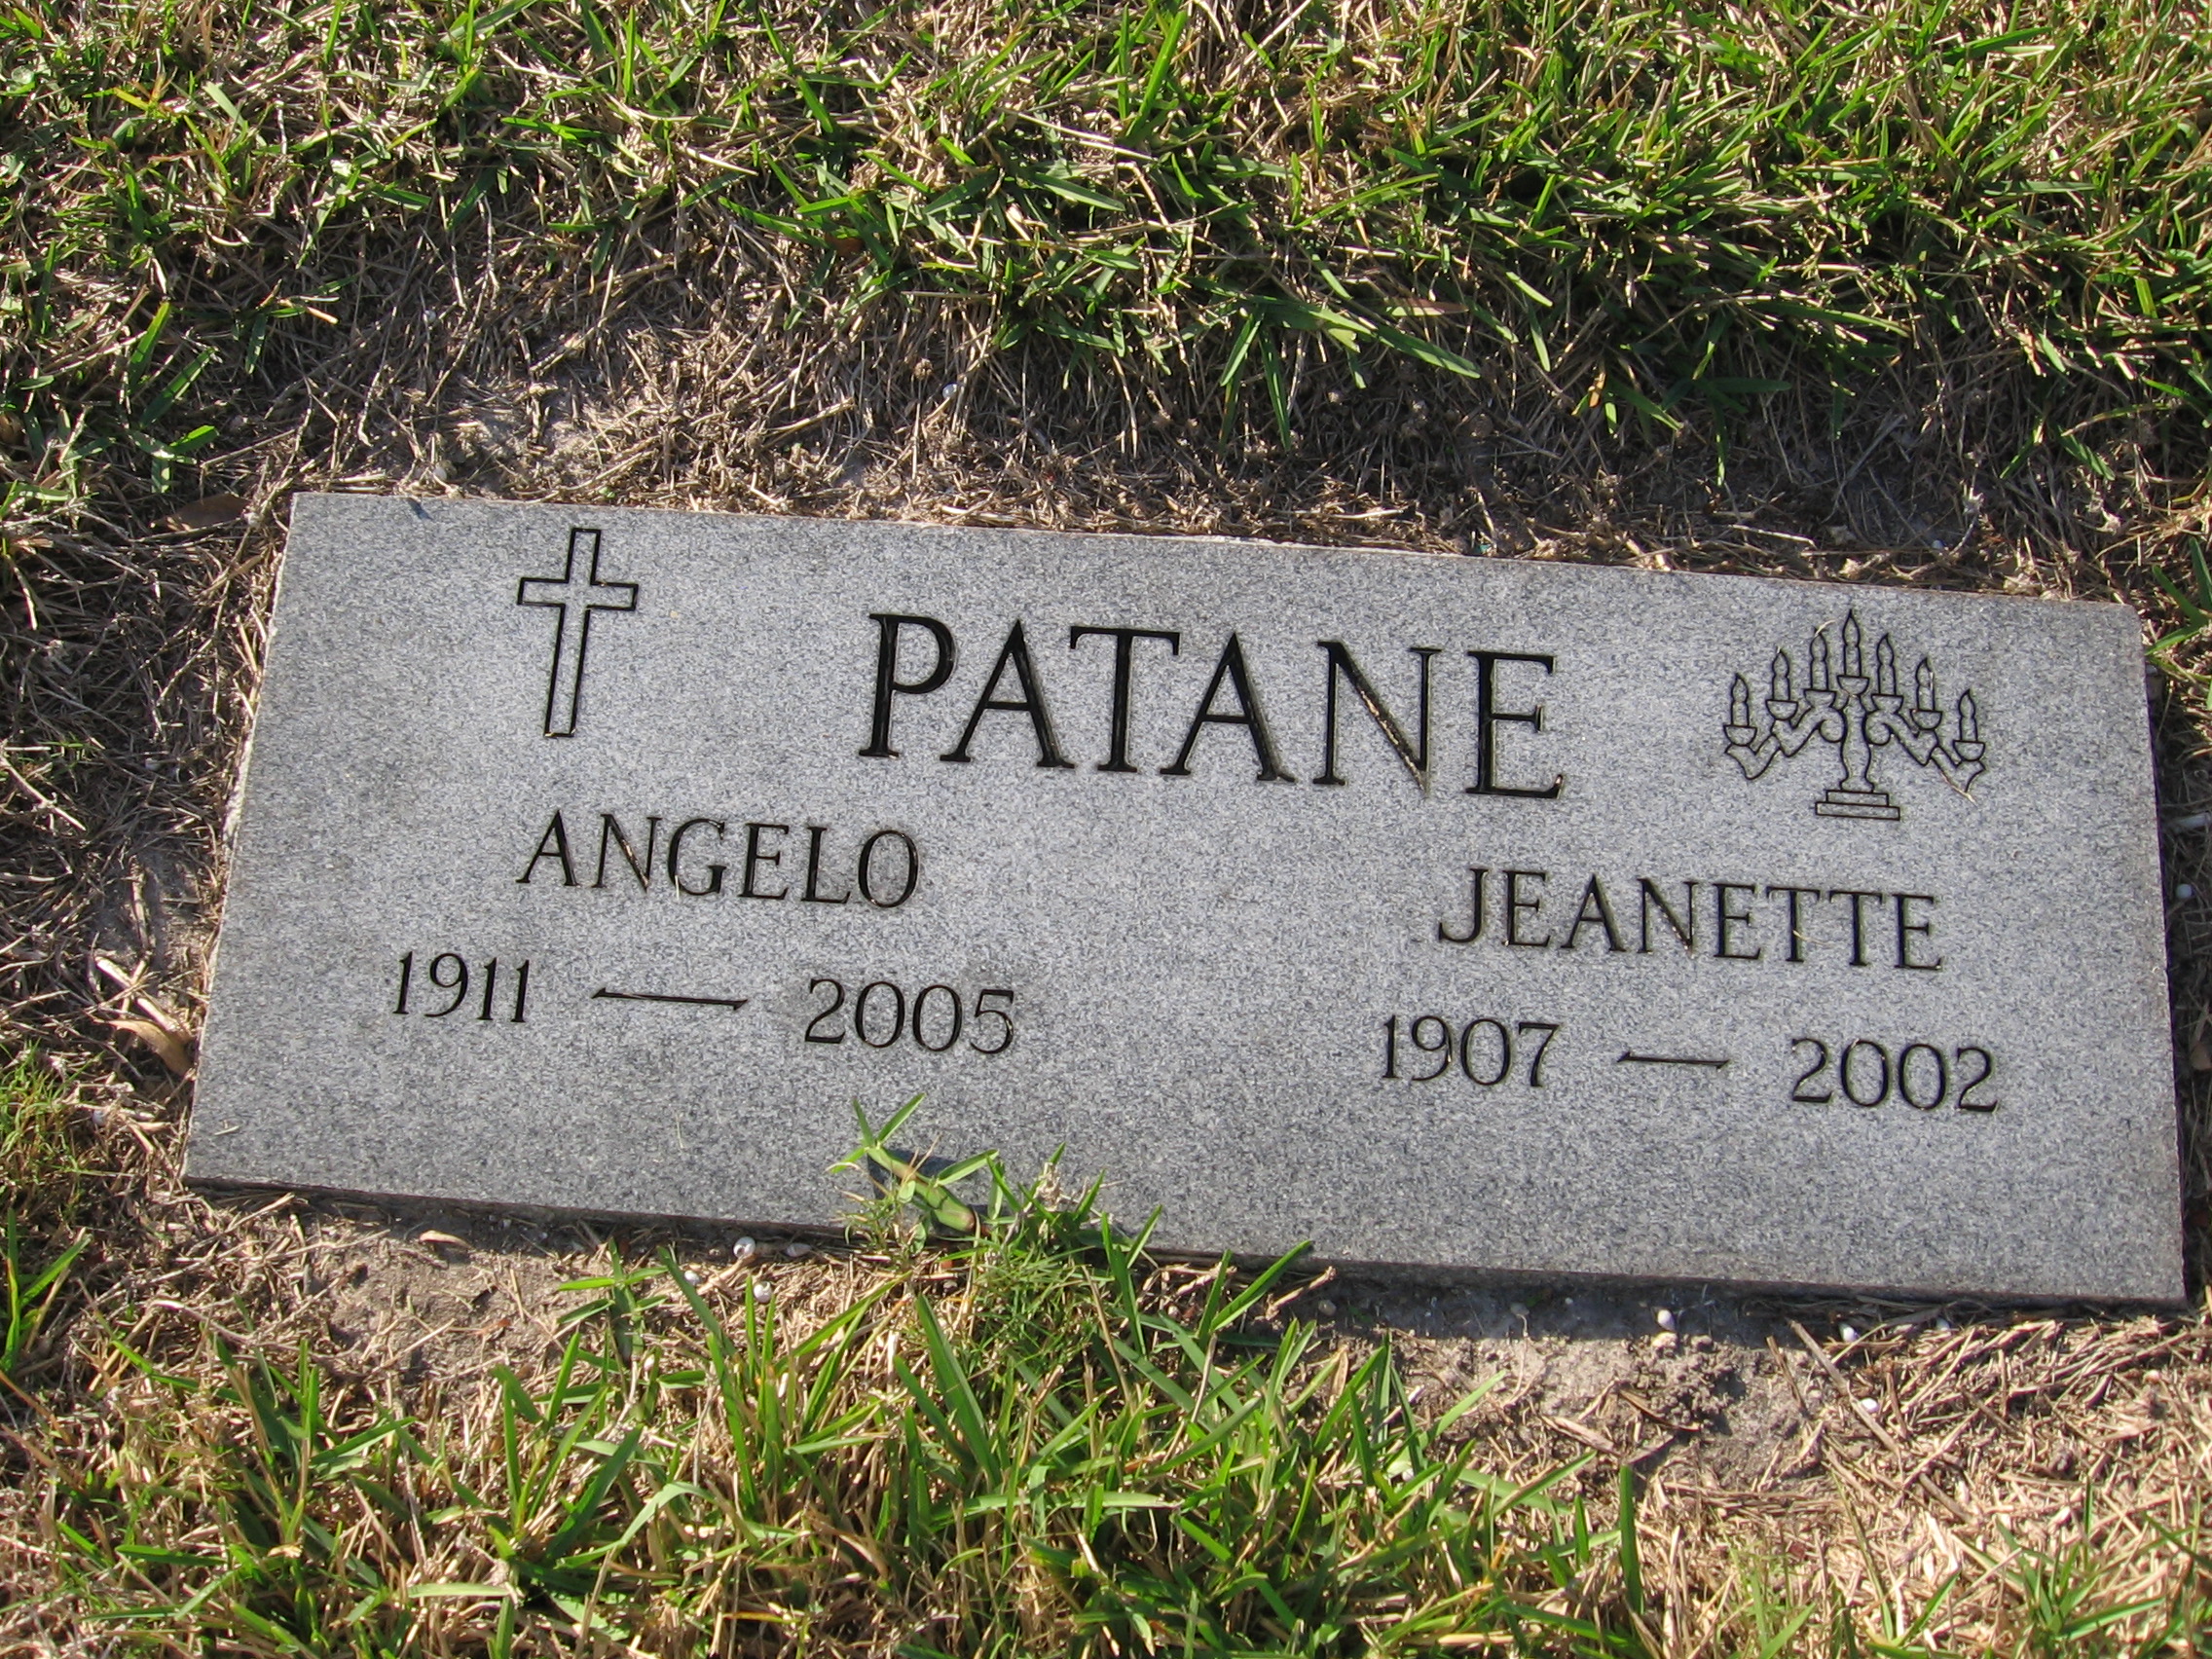 Jeanette Patane